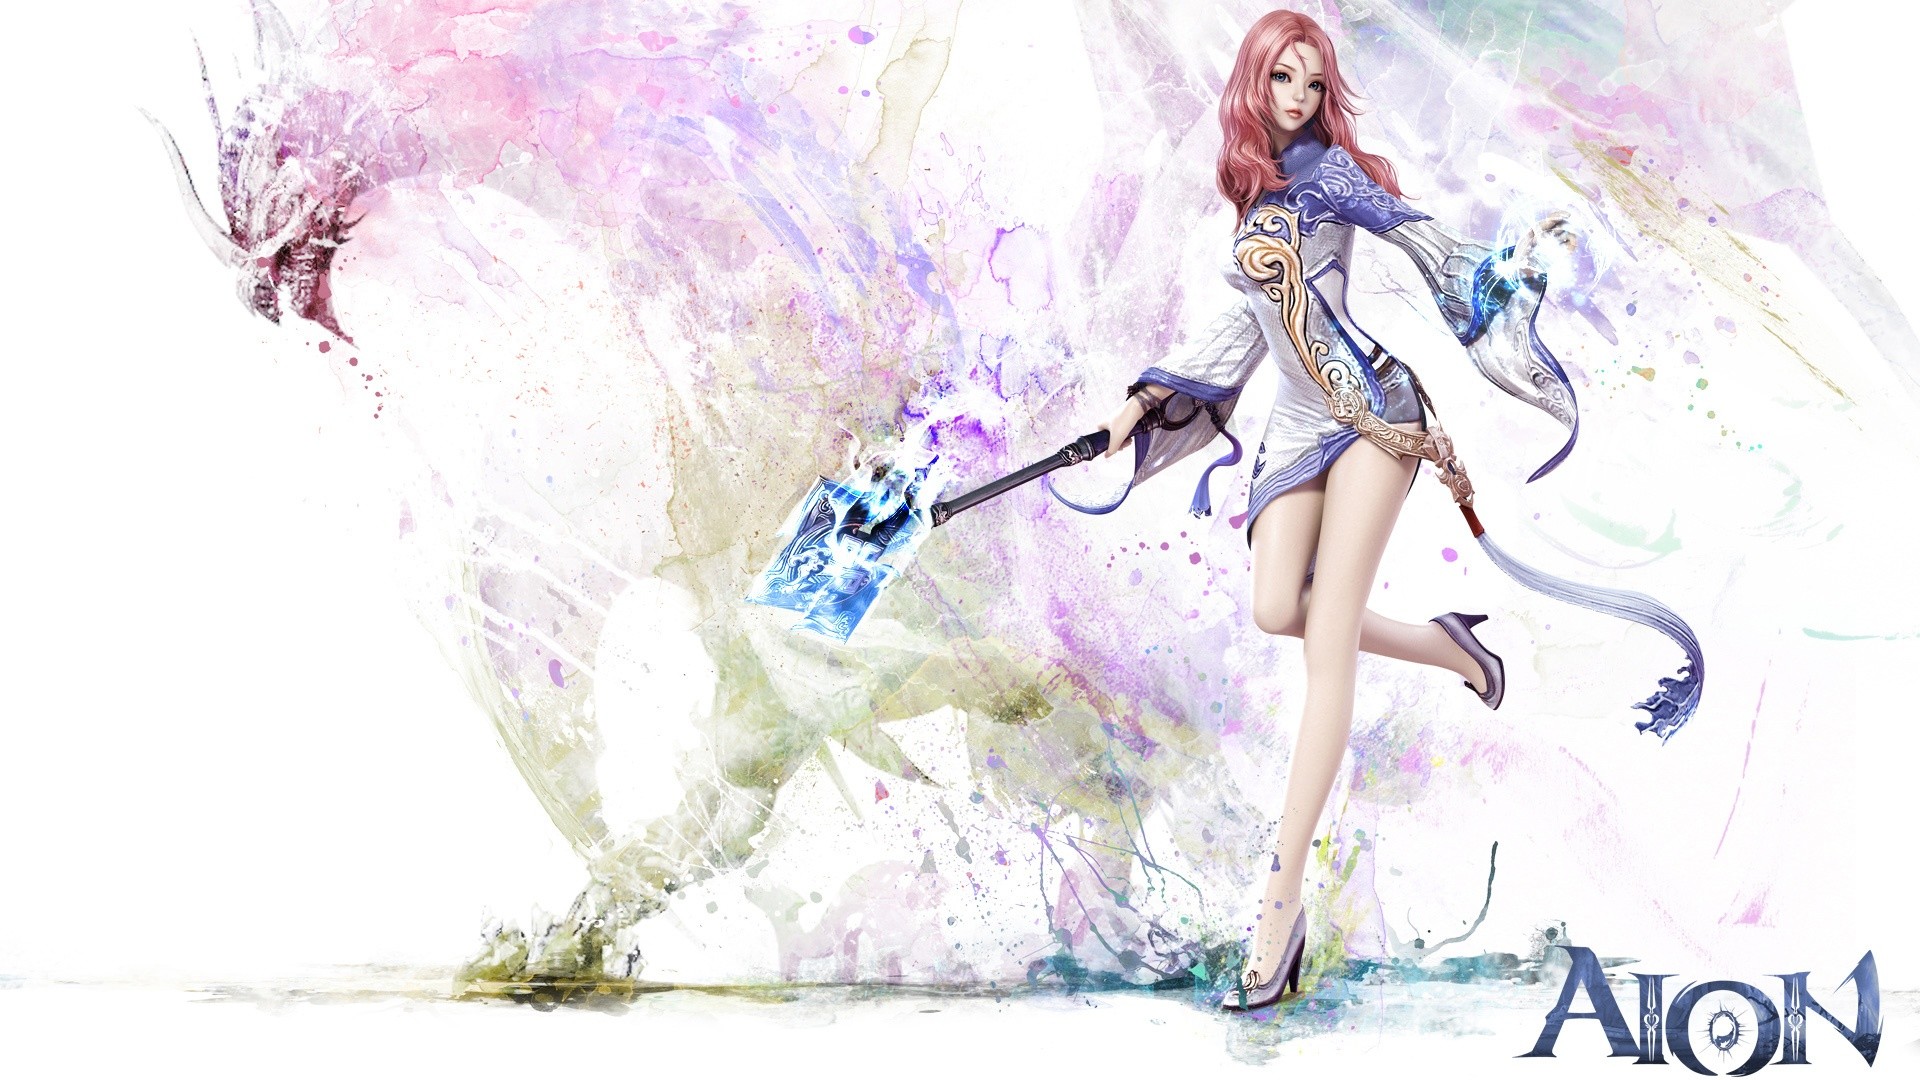 anime gaming wallpaper,illustration,fashion illustration,cg artwork,fictional character,art